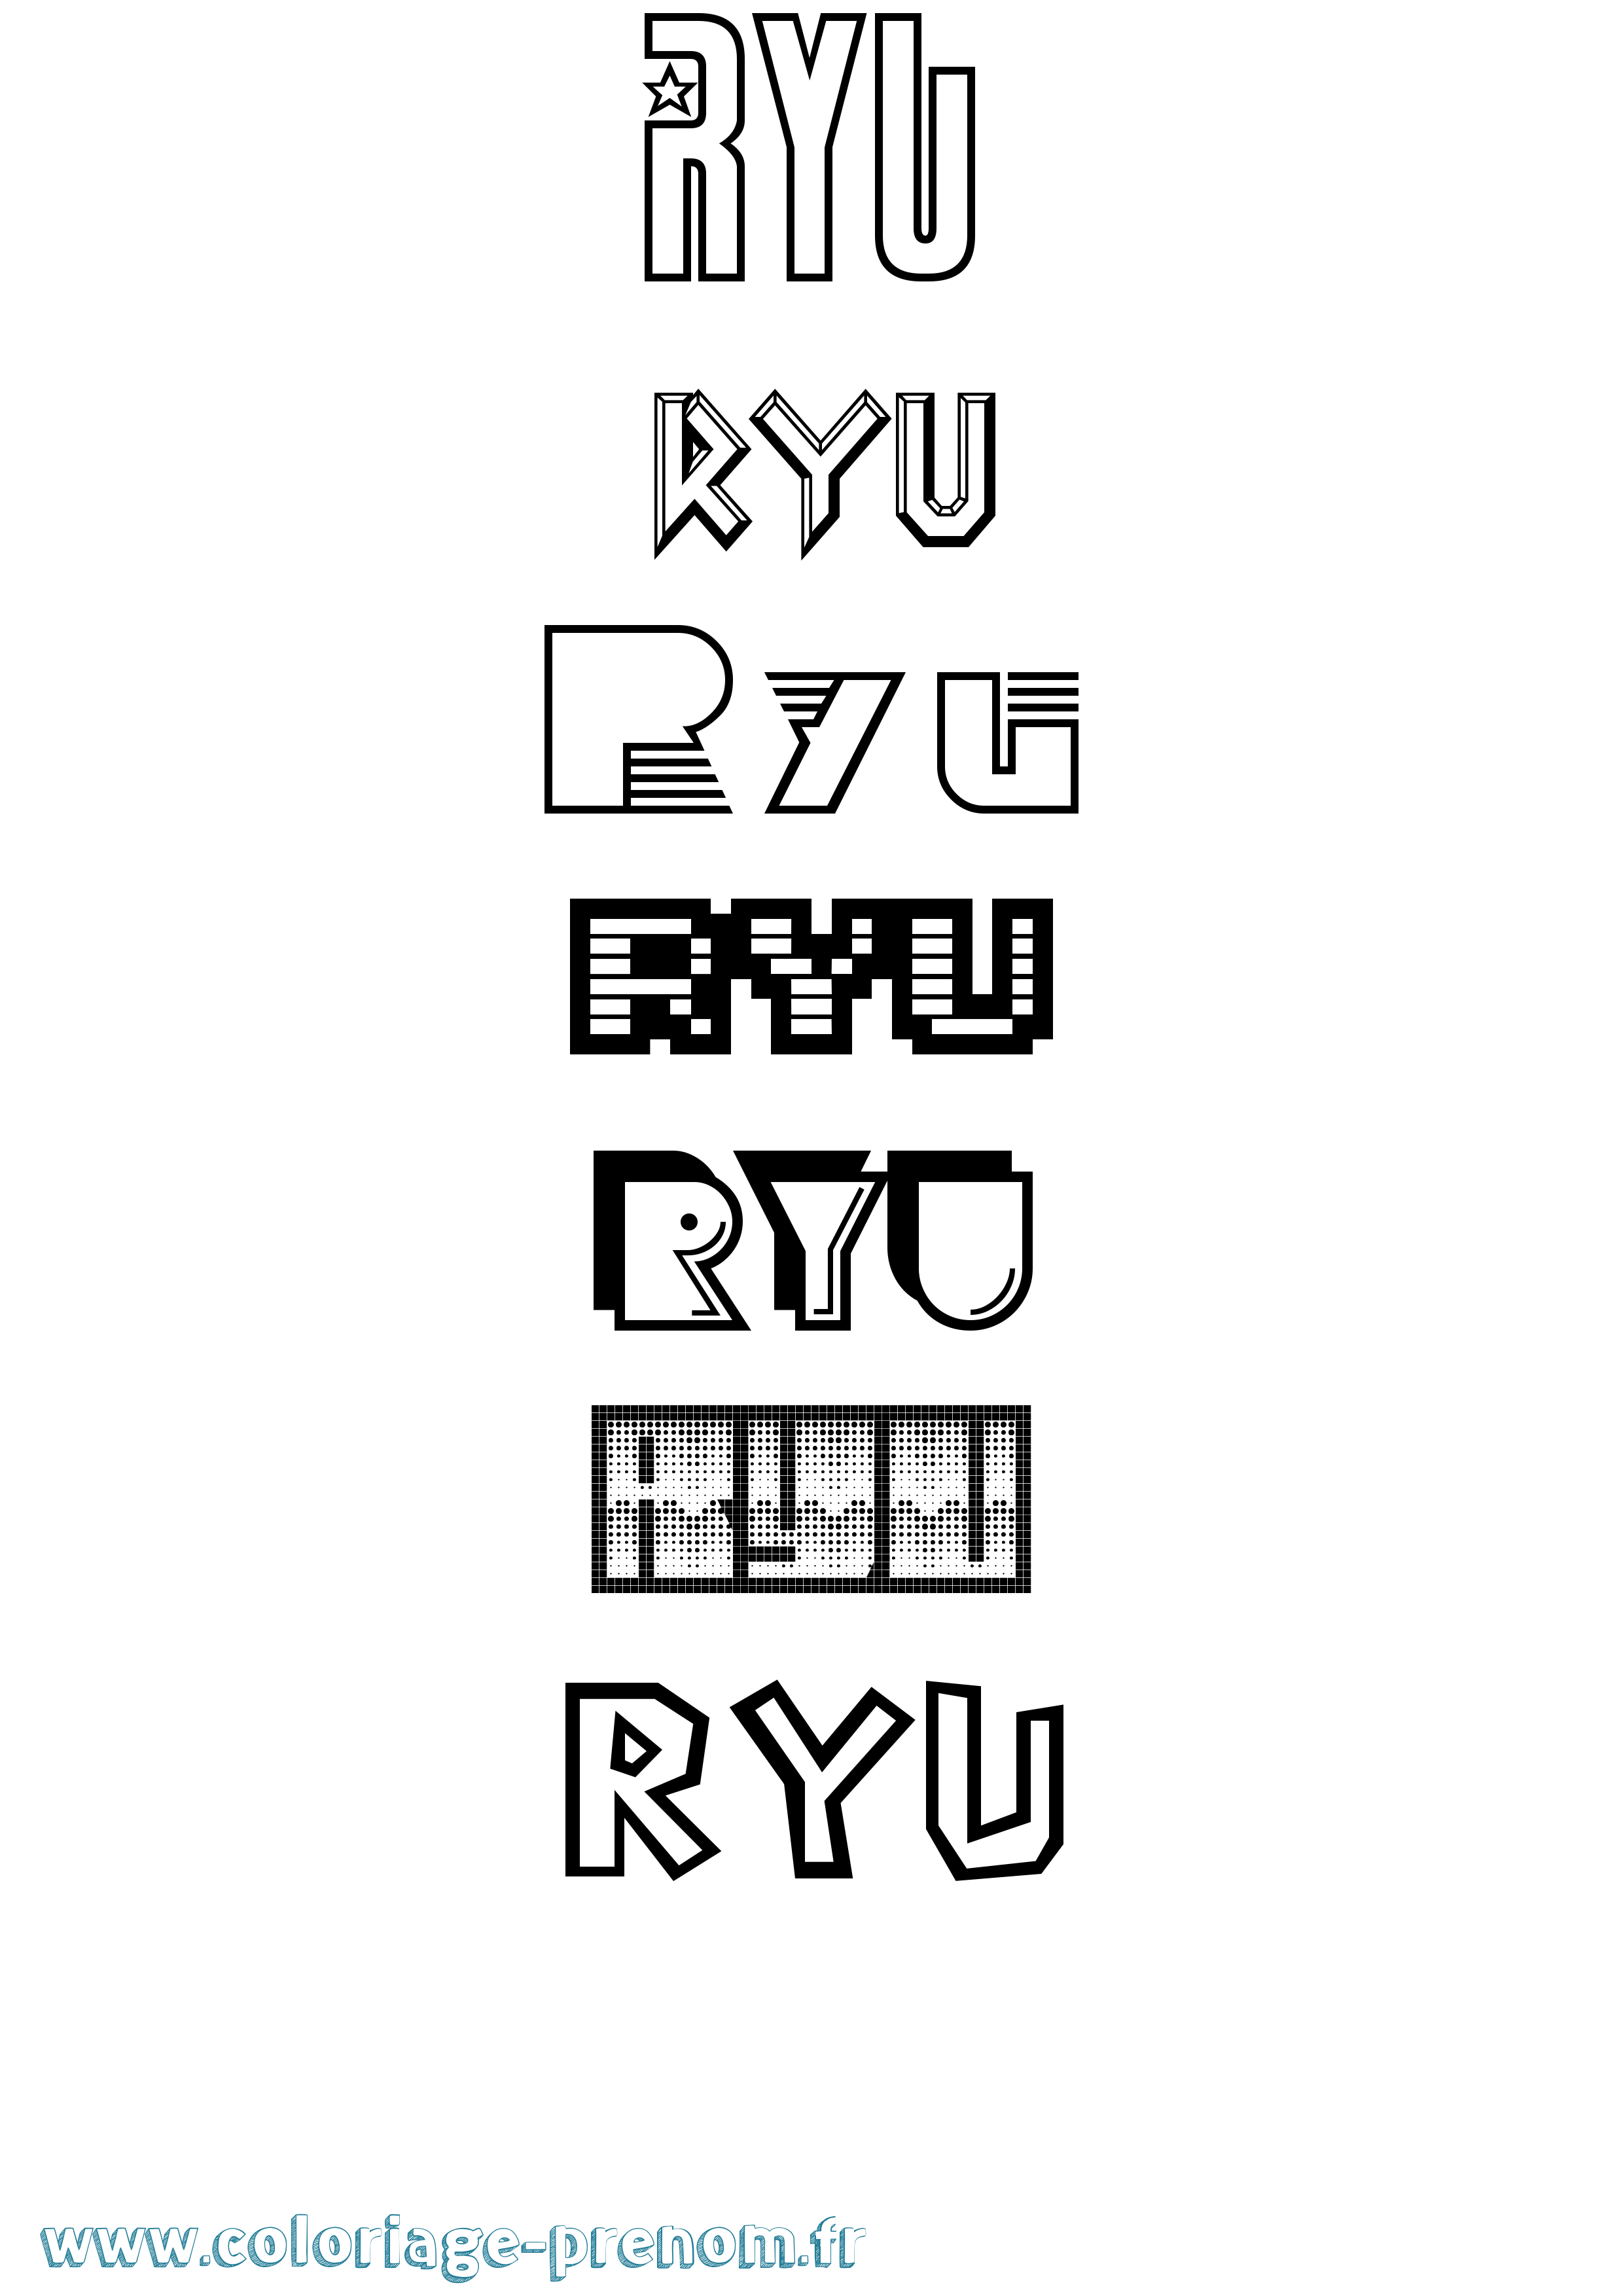 Coloriage prénom Ryu Jeux Vidéos